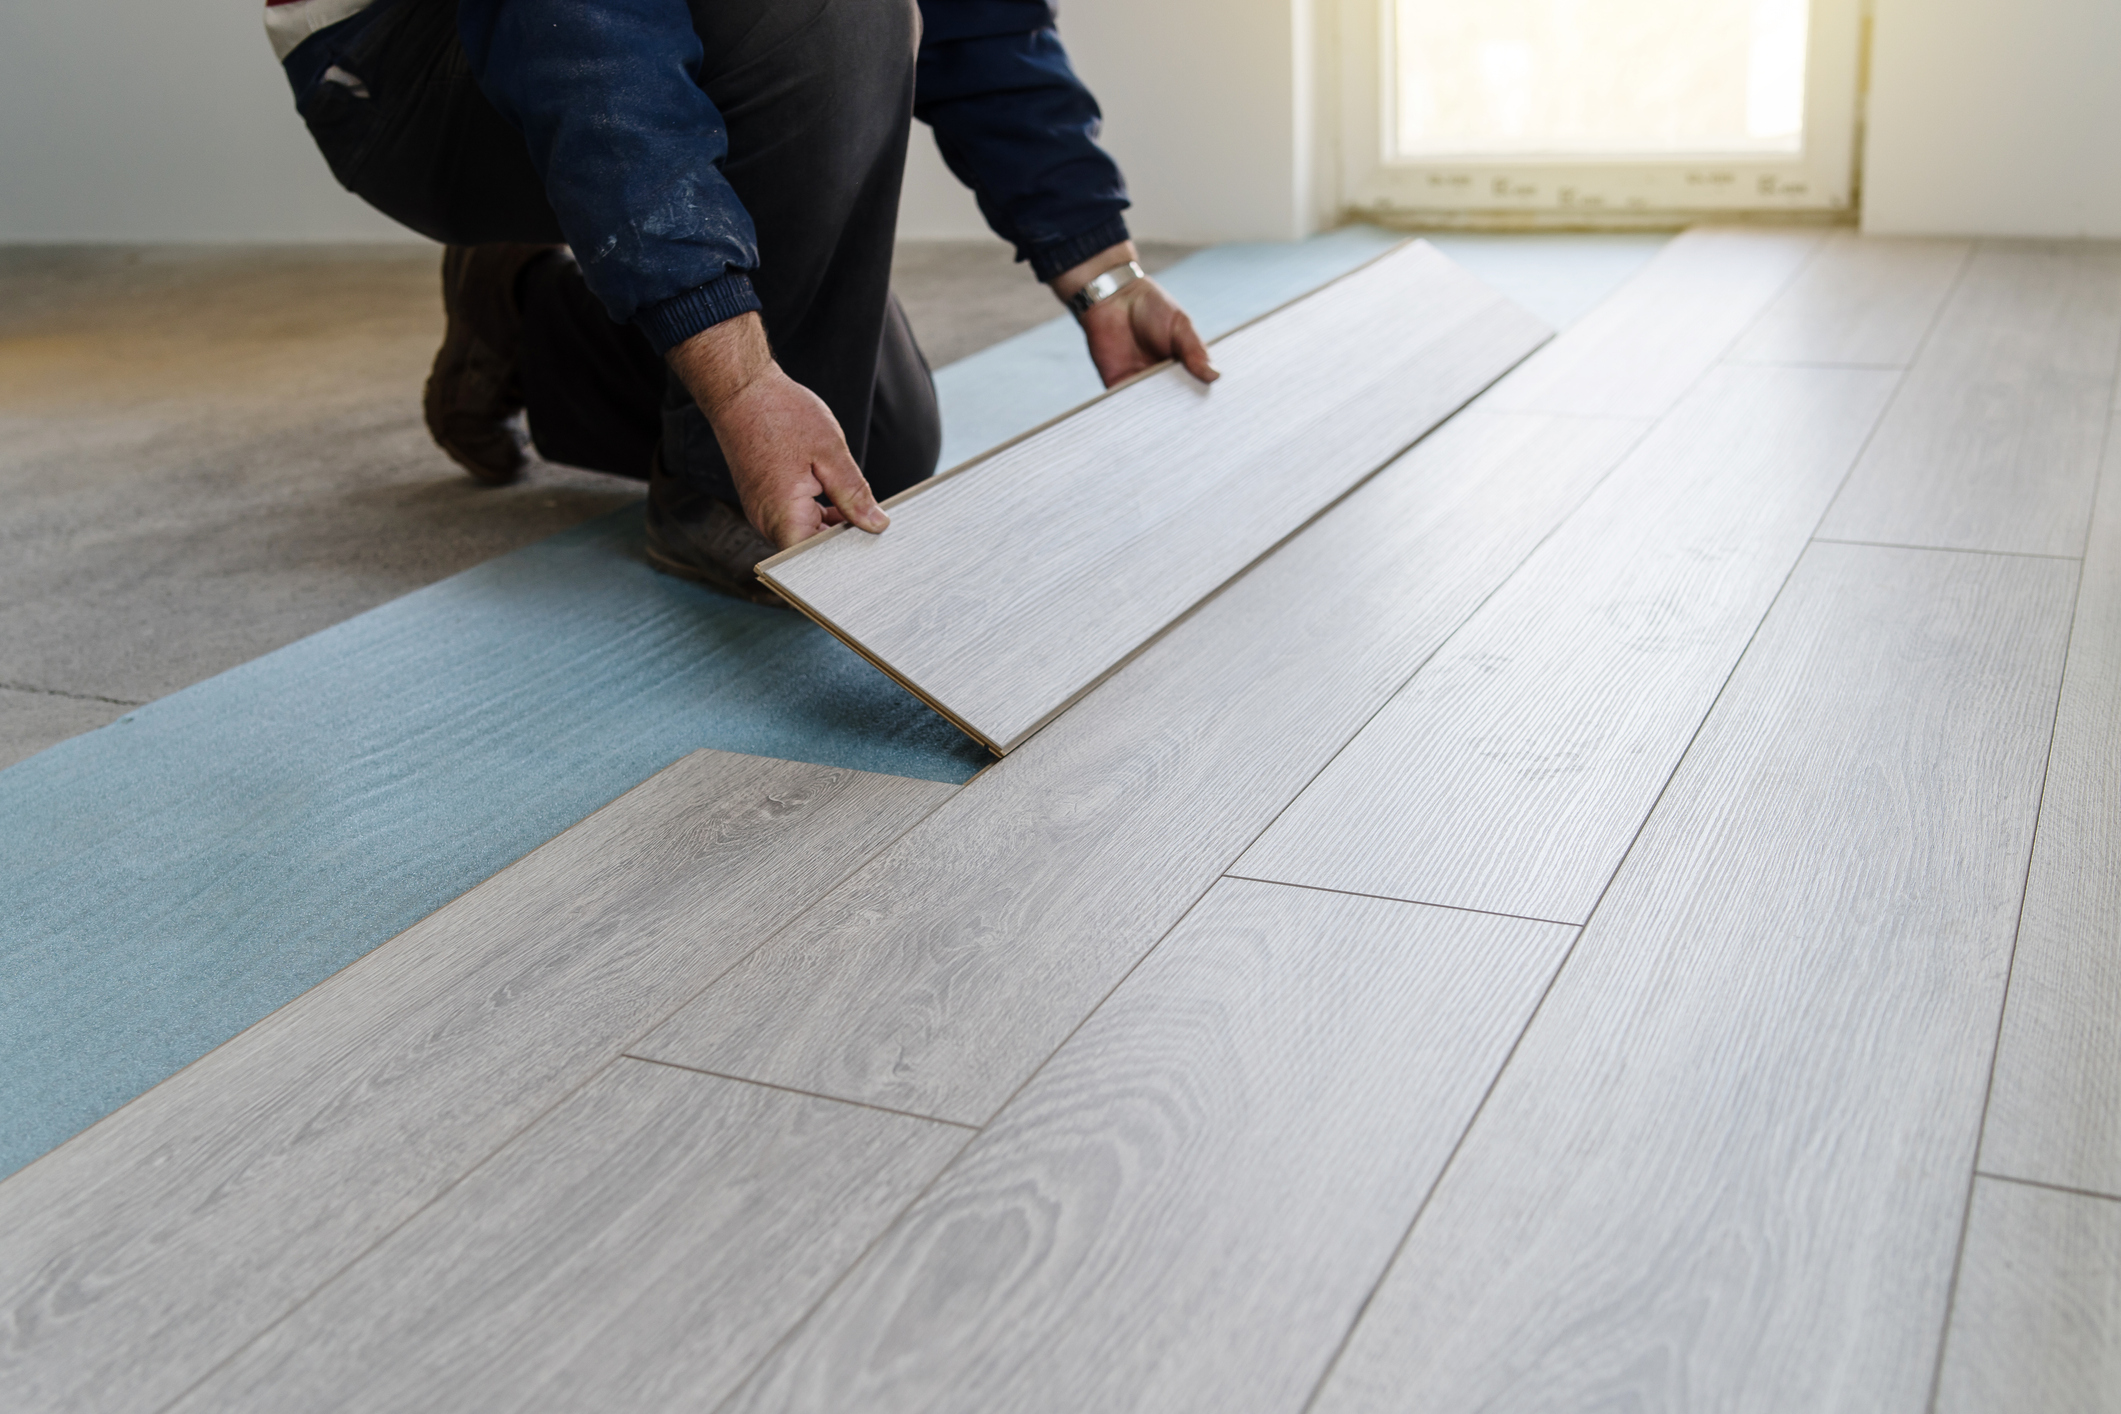 Temporary Flooring Ideas, How To Install Laminate Flooring In Multiple Rooms